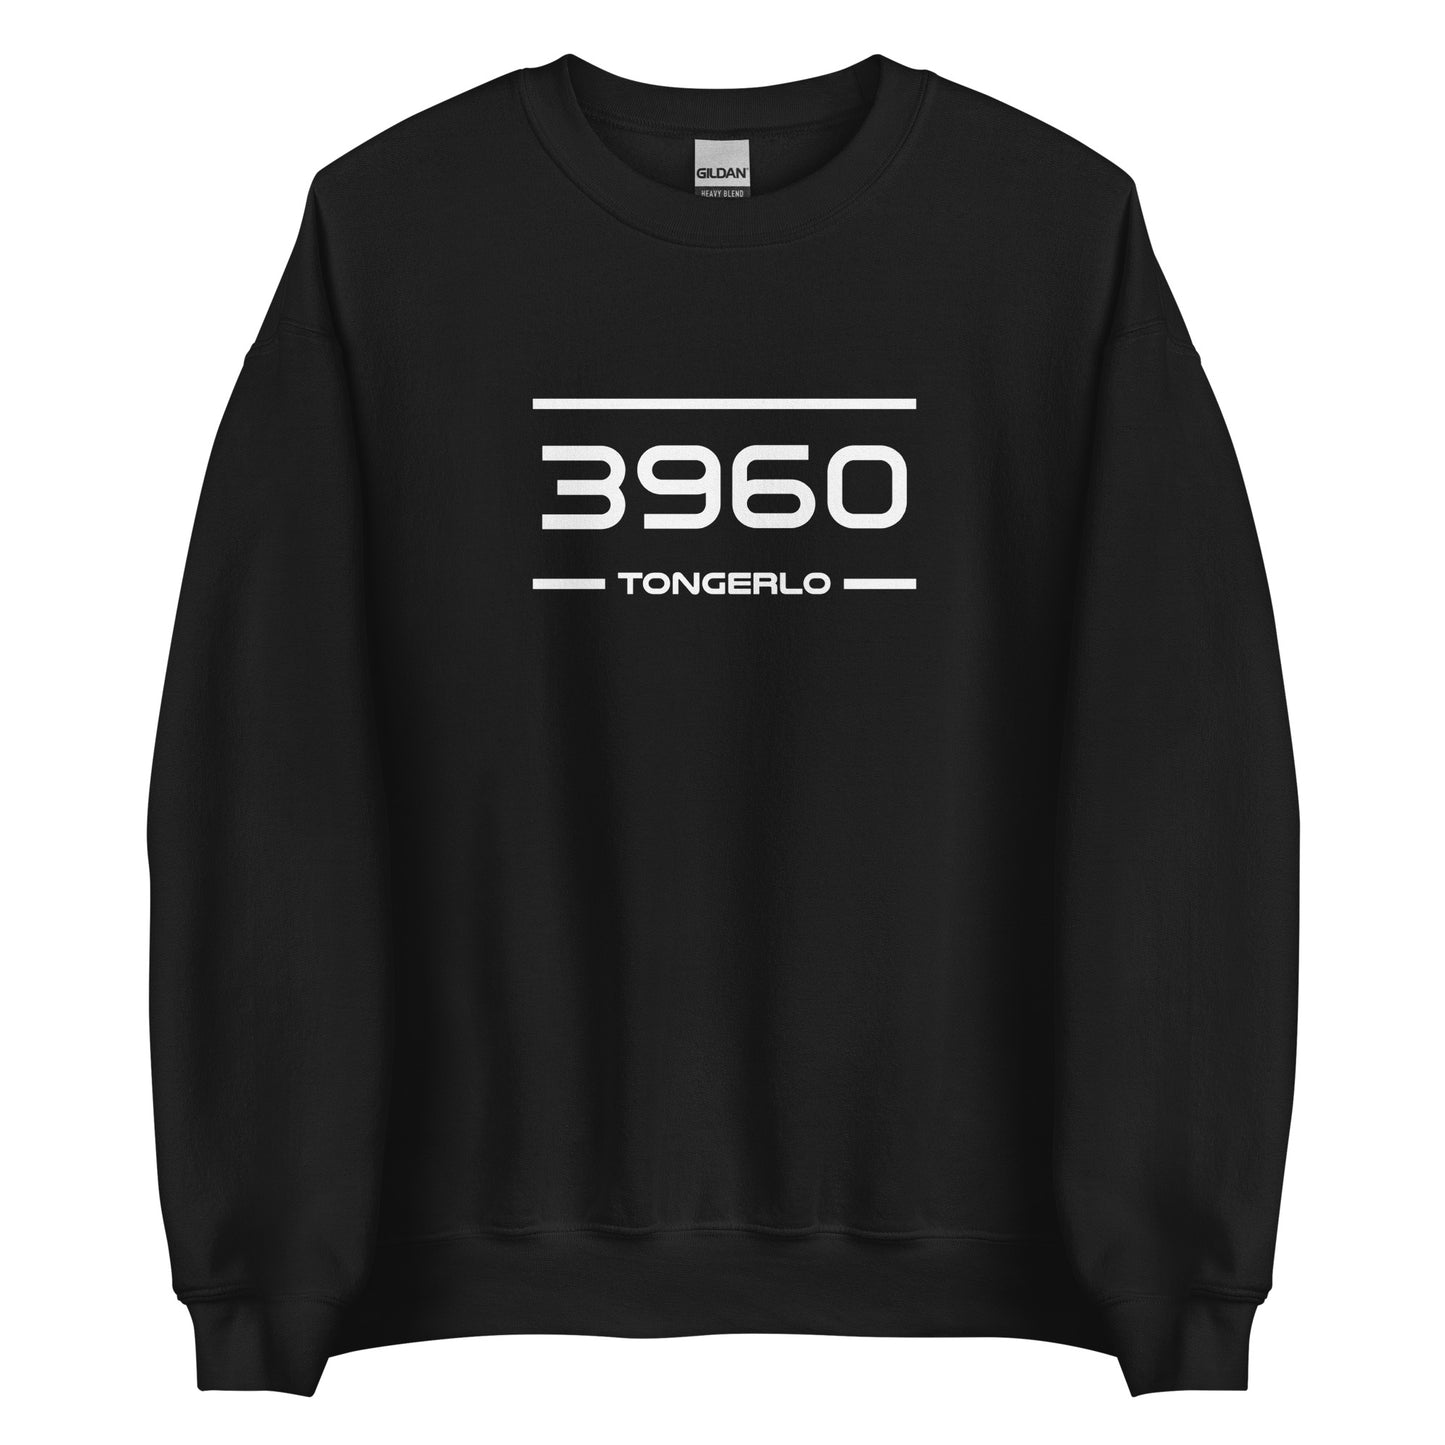 Sweater - 3960 - Tongerlo (M/V)